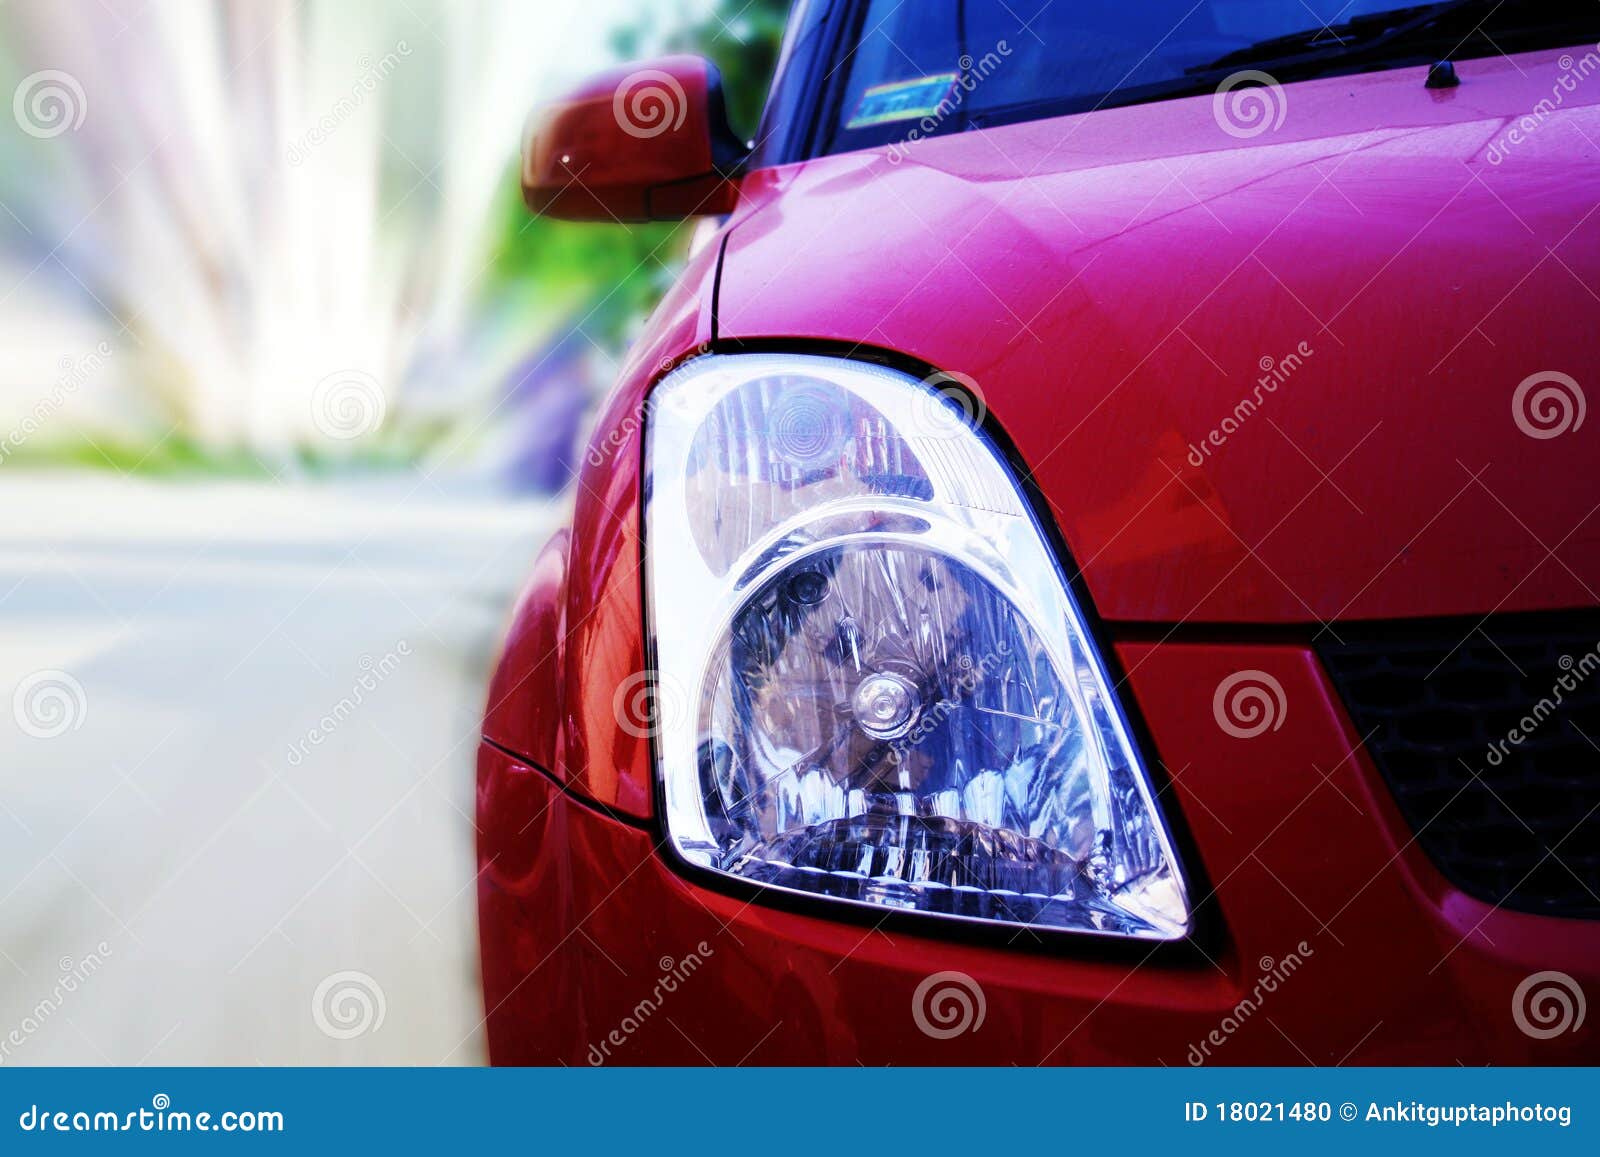 car headlights